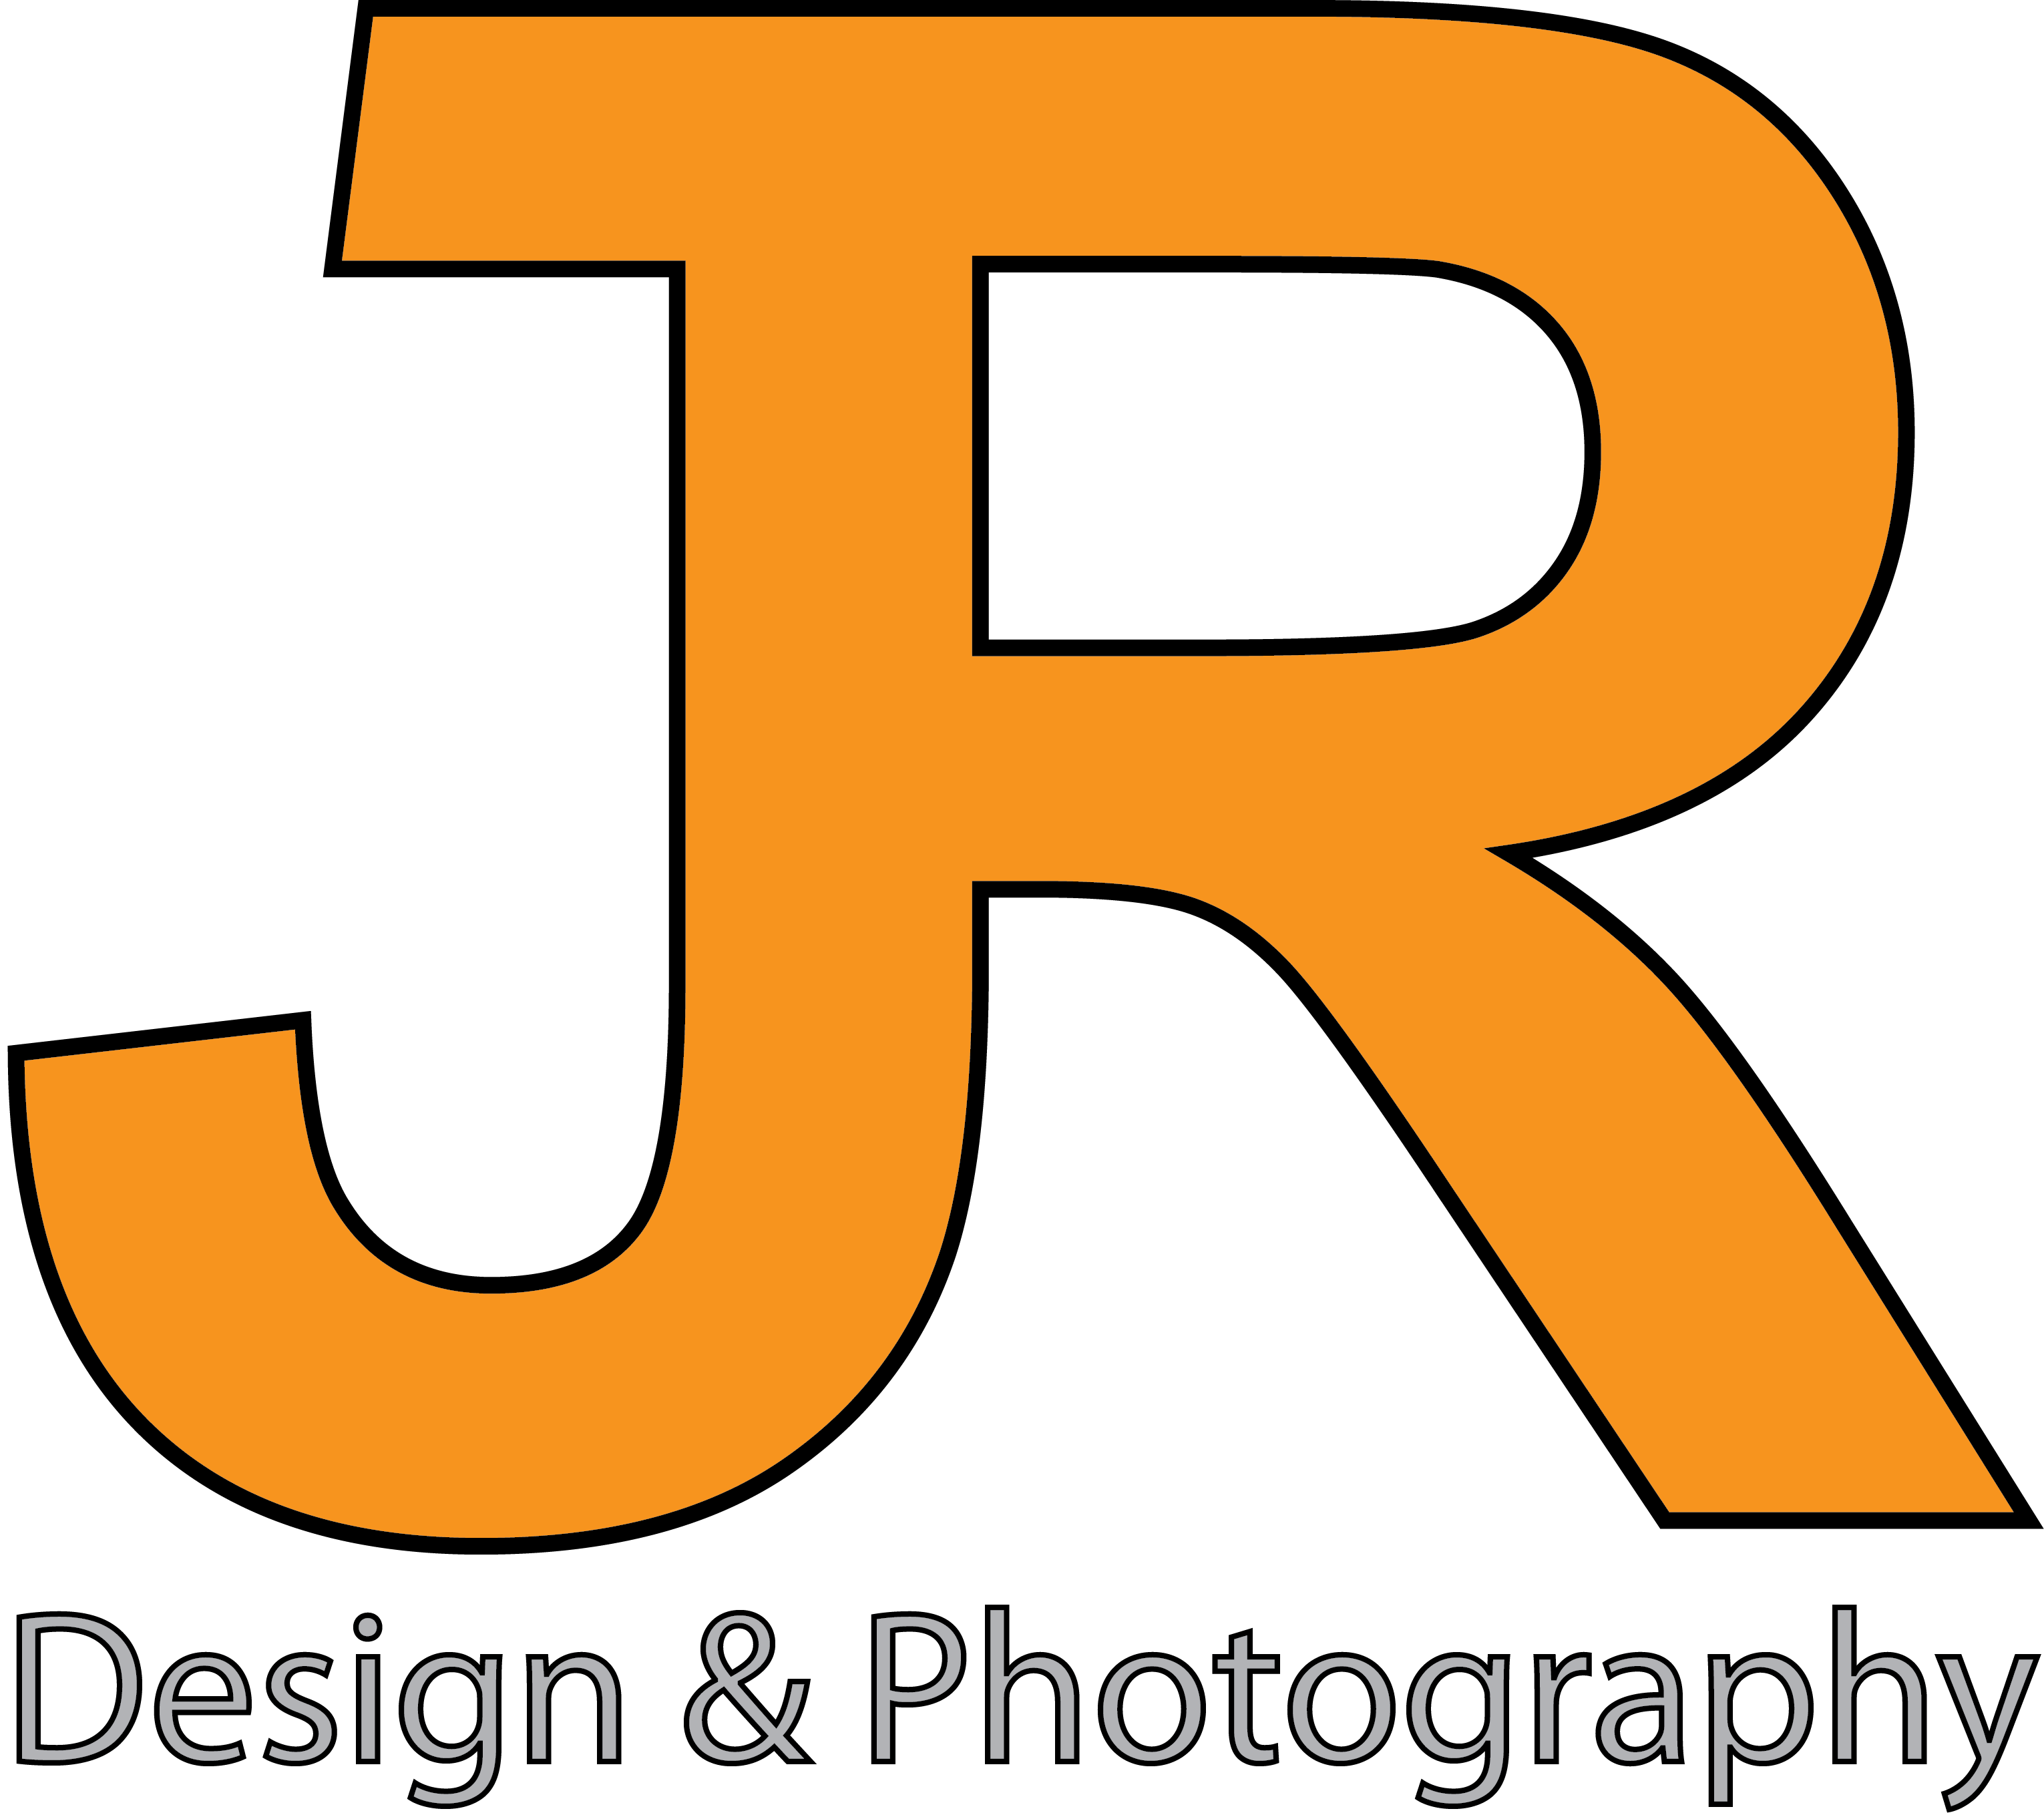 JR Design & Photography